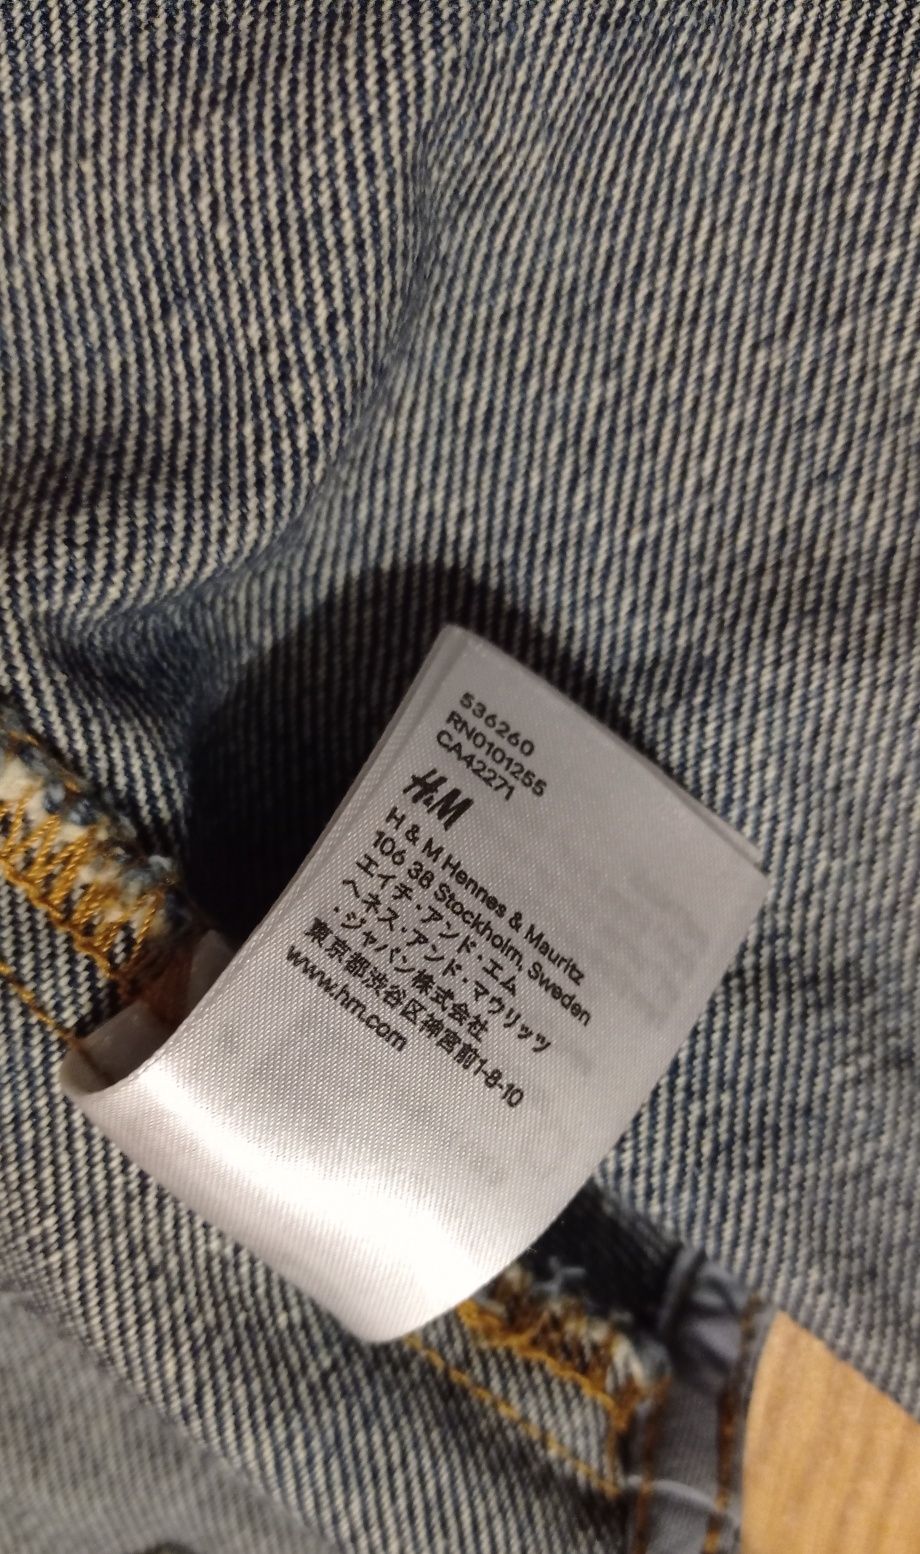 H&M Divided jeansowa kamizelka z ćwiekami, r. 34